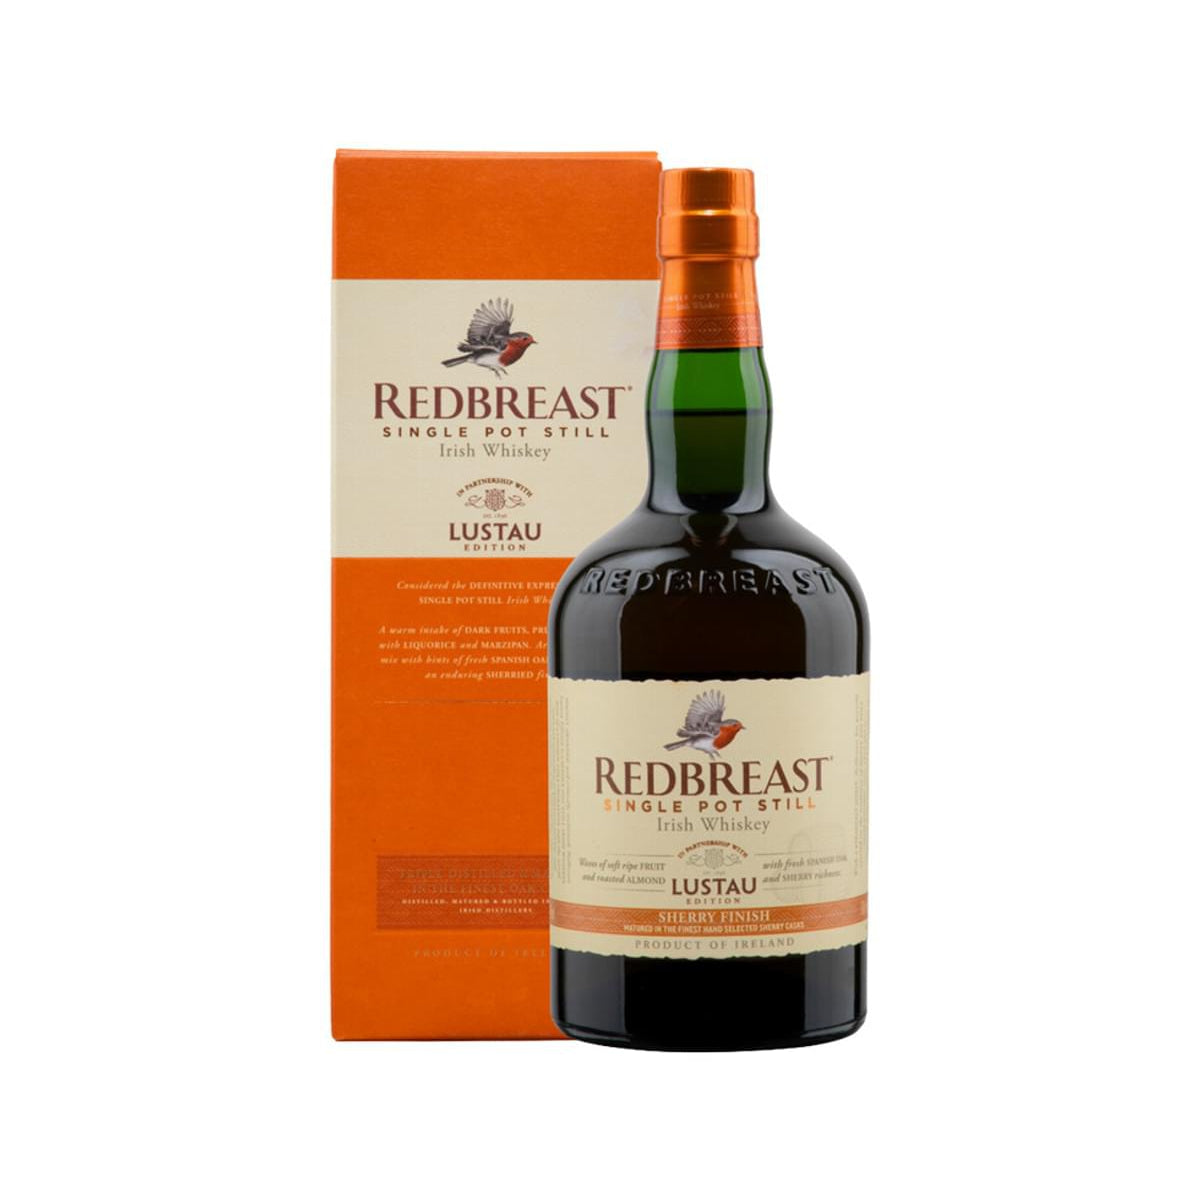 Redbreast Lustau Edition Sherry Finish Single Pot Still Irish Whiskey 700ml